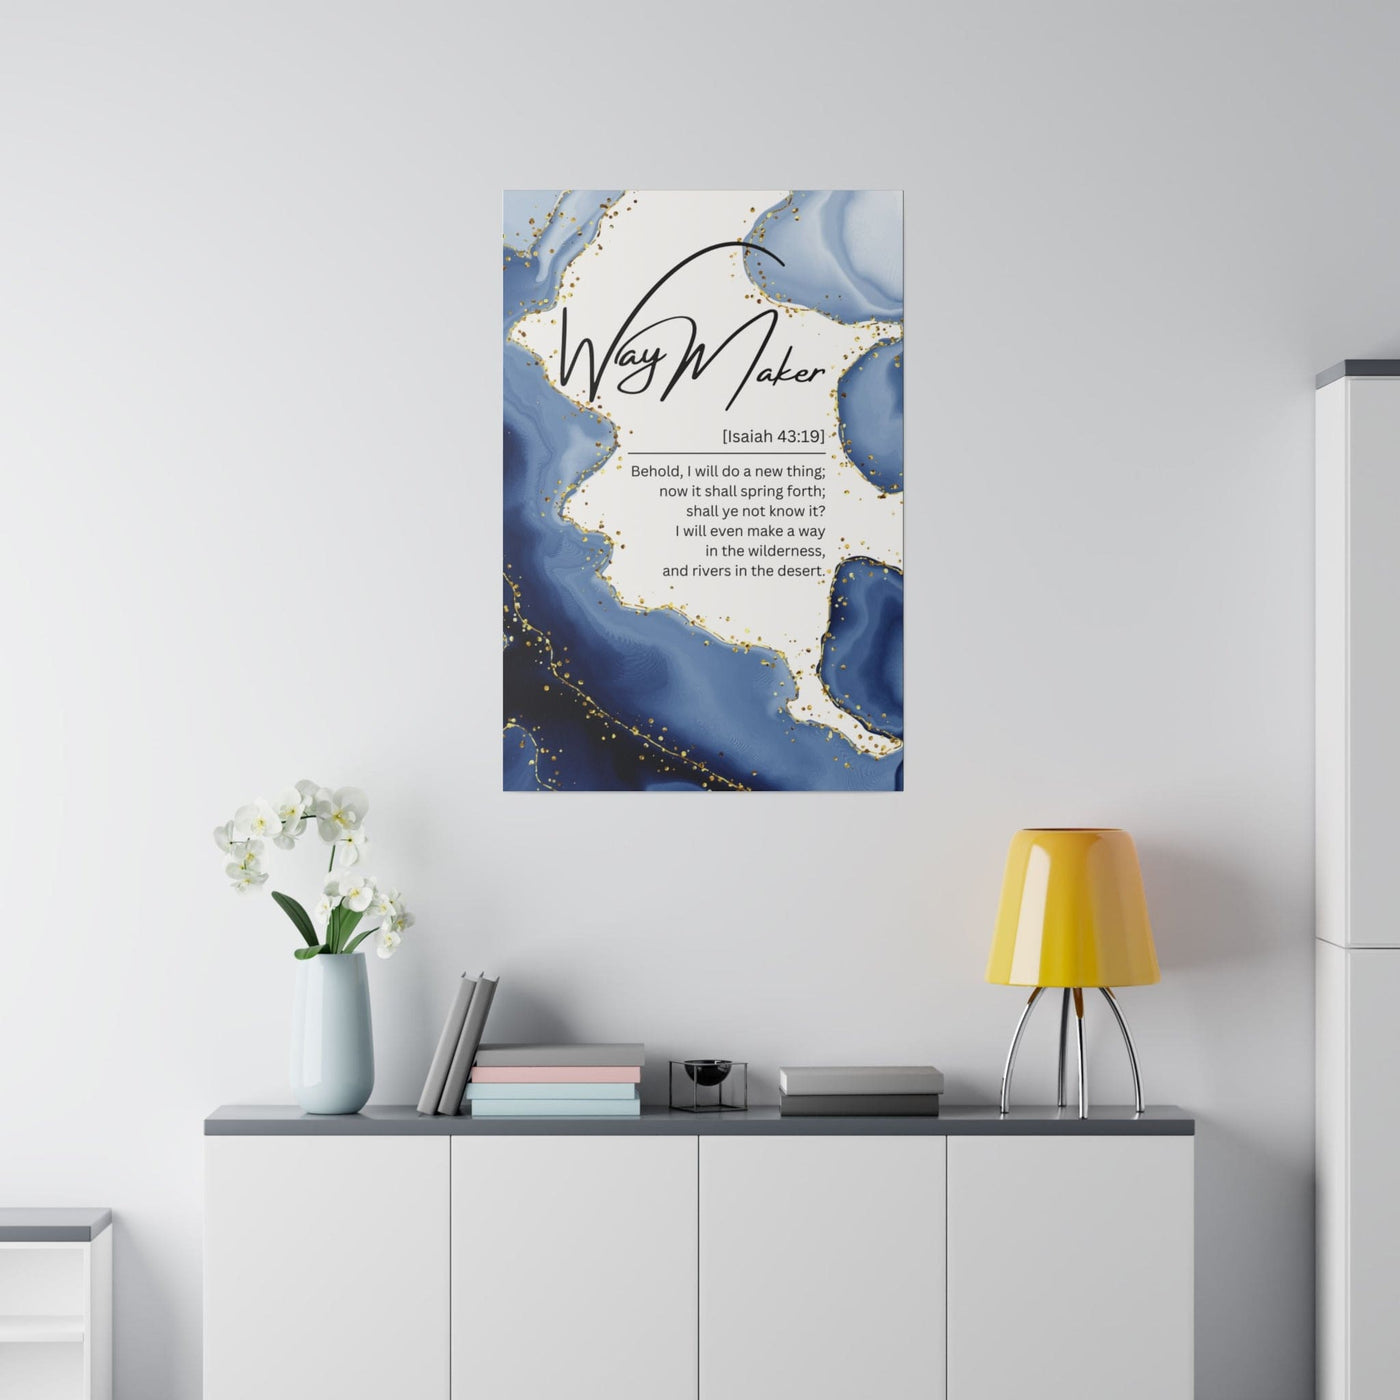 Wall Art Poster Print for Living Room Office Decor Bedroom Artwork Way Maker